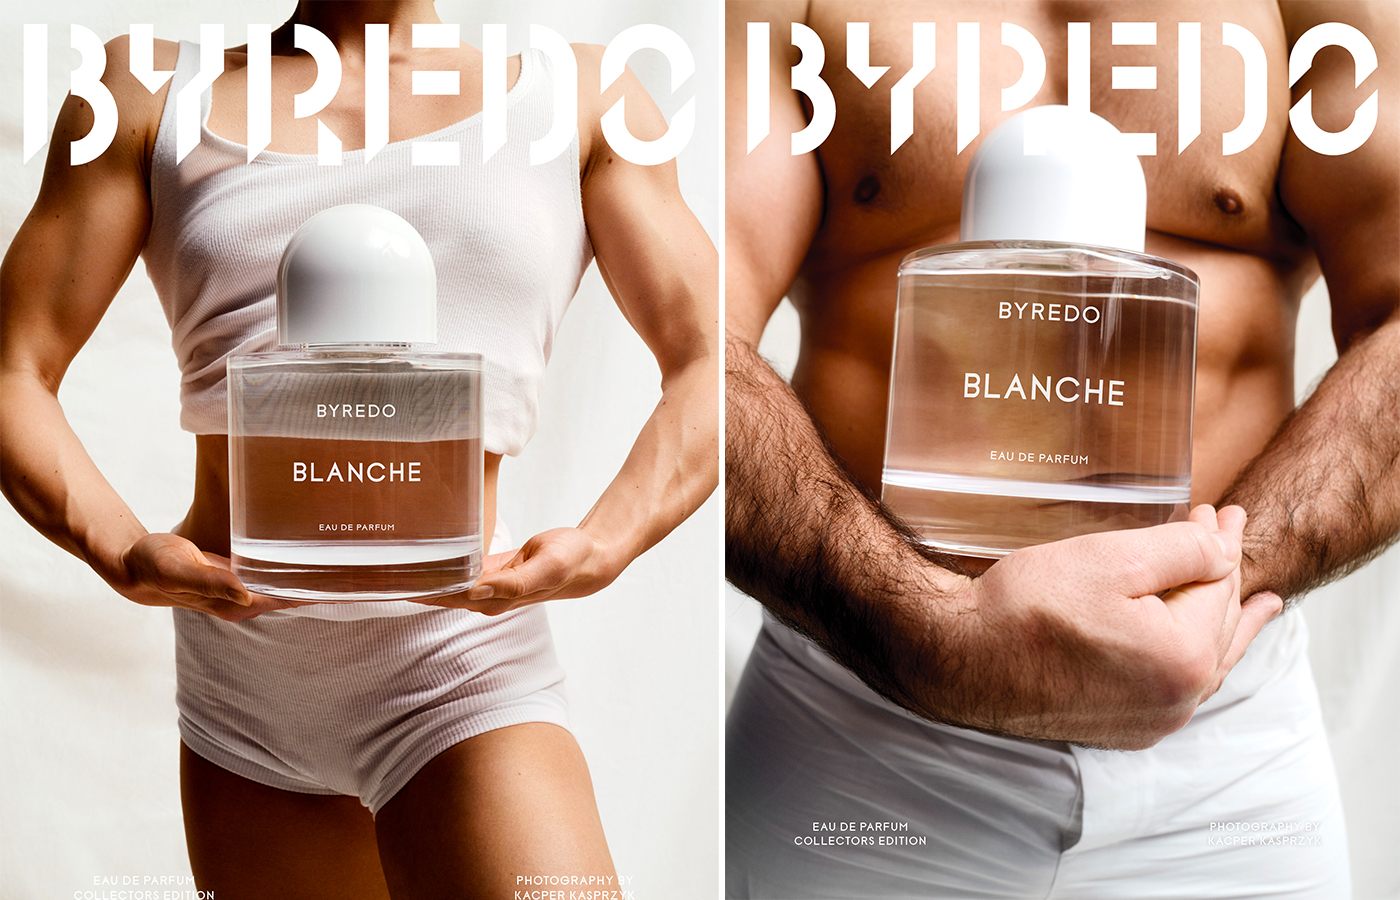 Byredo Blanche Limited Edition 2021